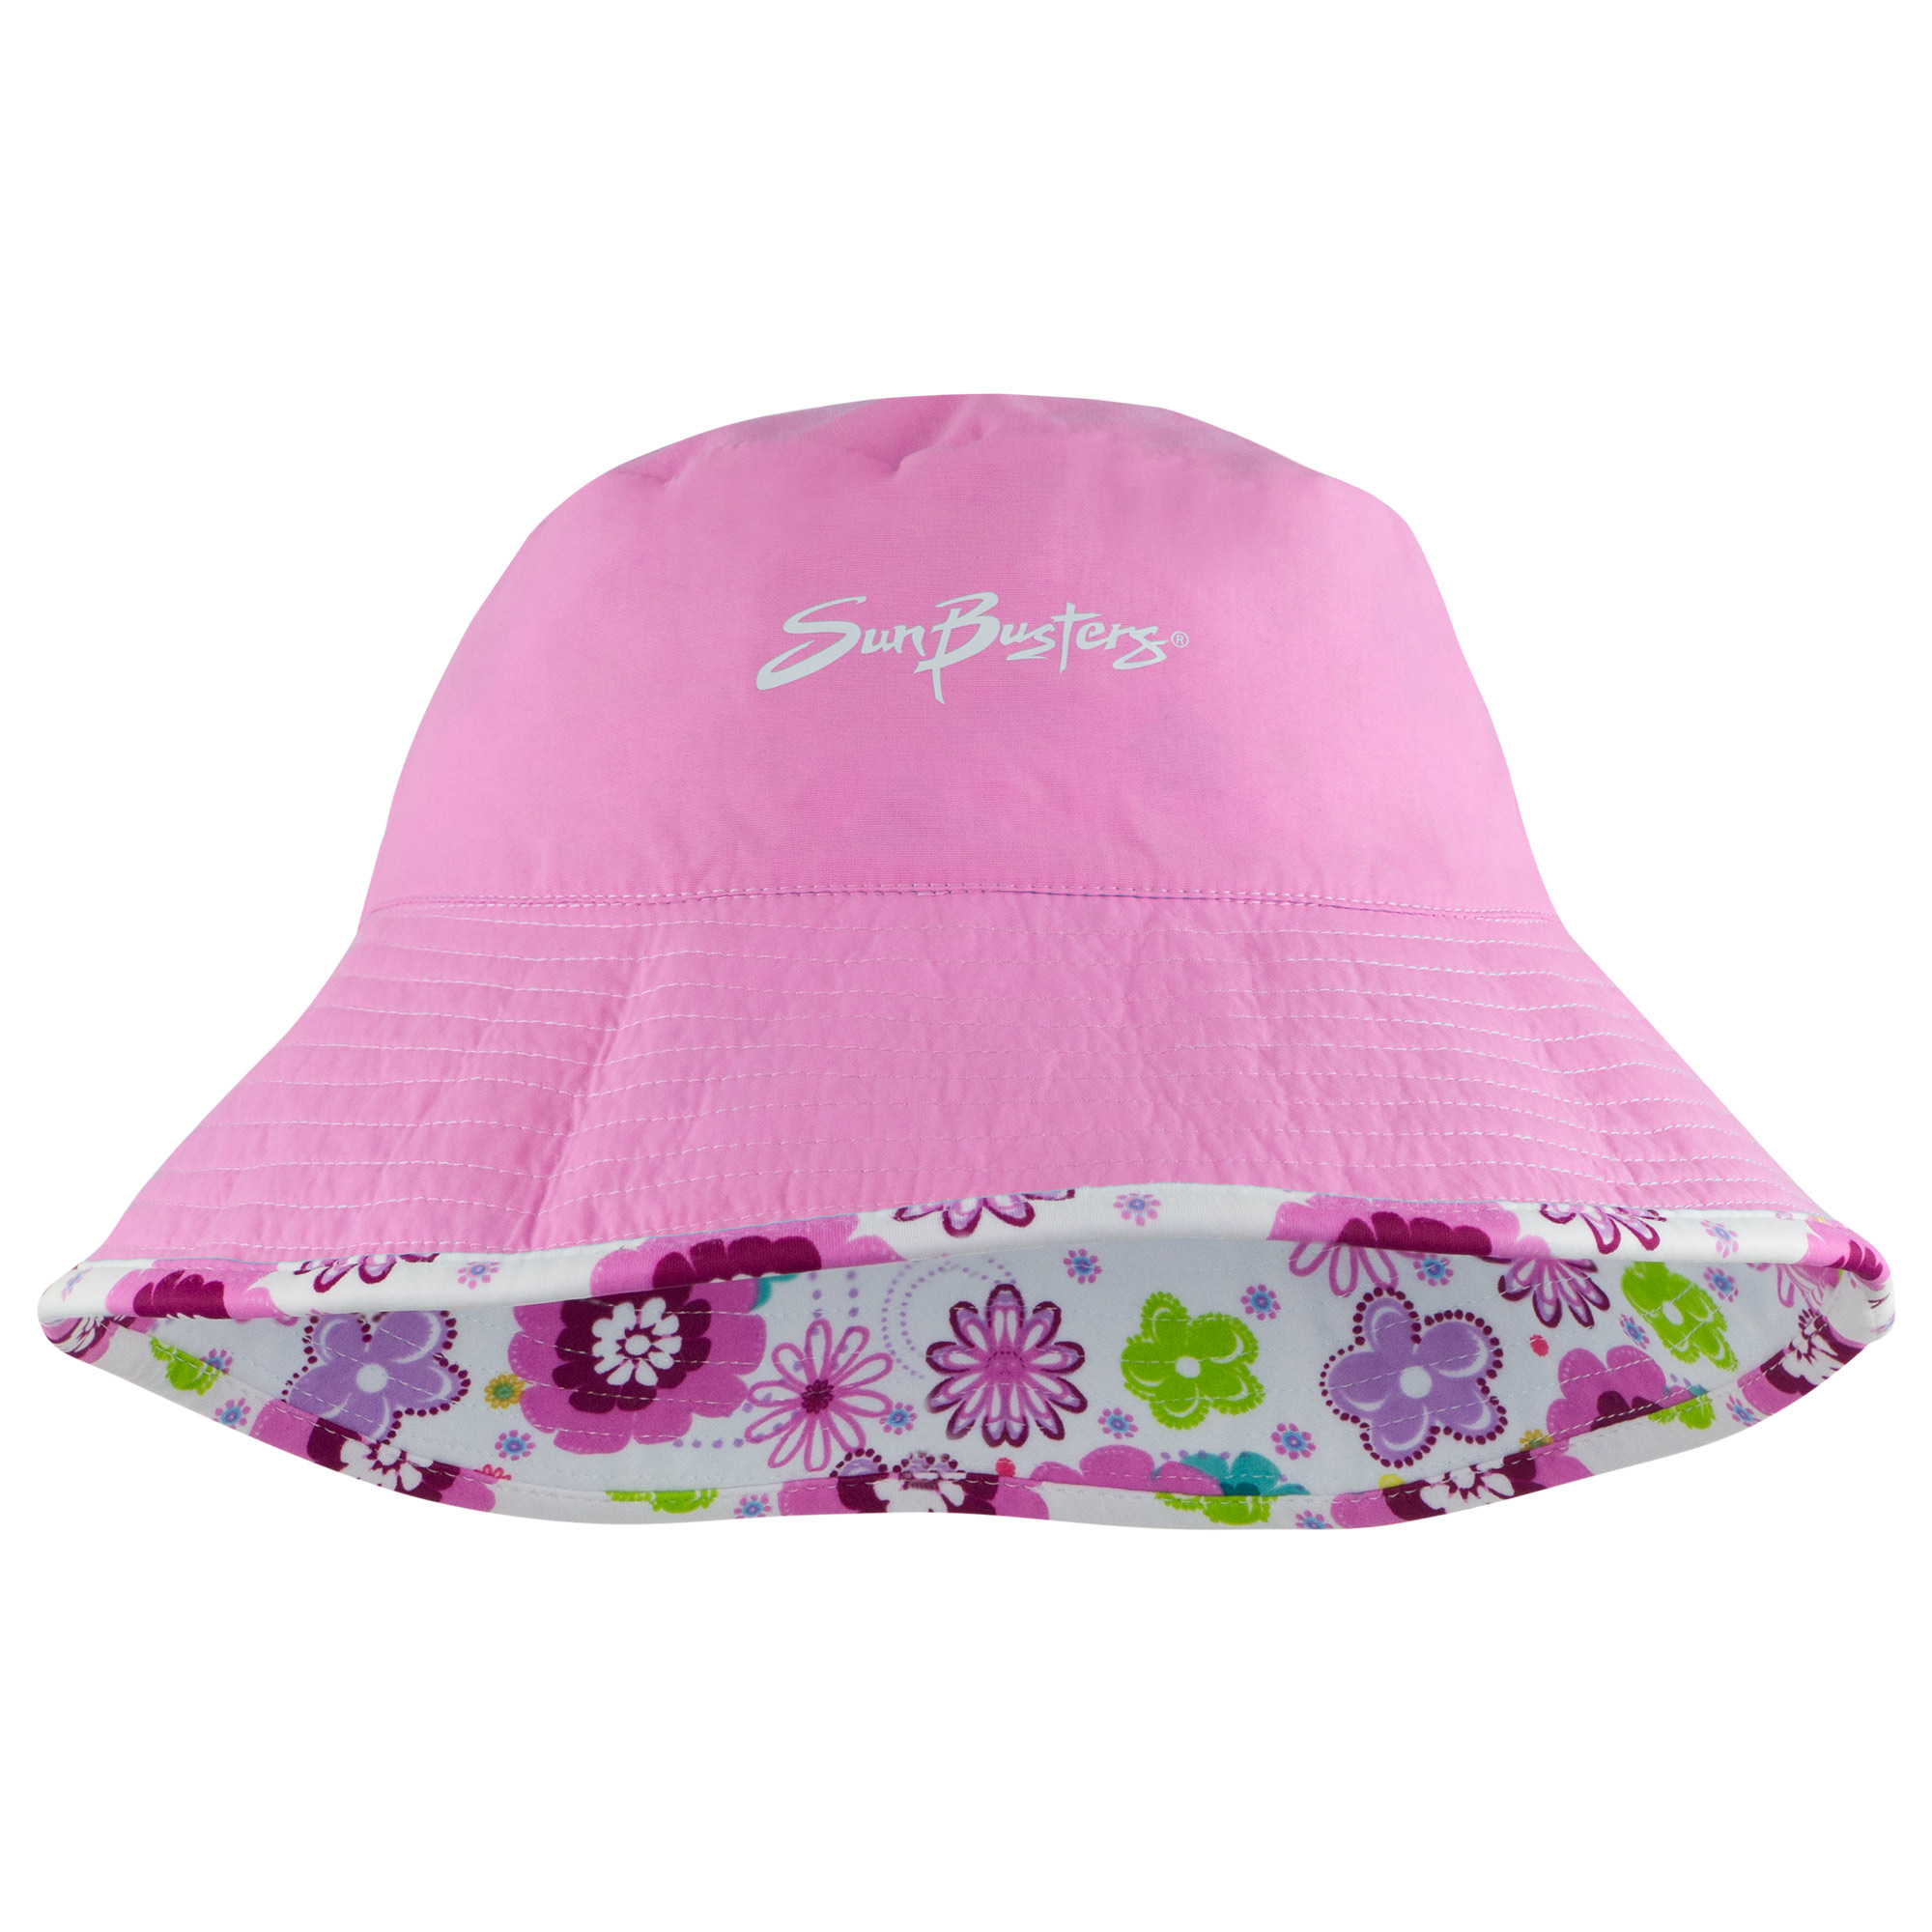 SunBusters Girls Reversible Bucket Hat (UPF 50+), Poppyberry, Small - image 2 of 3